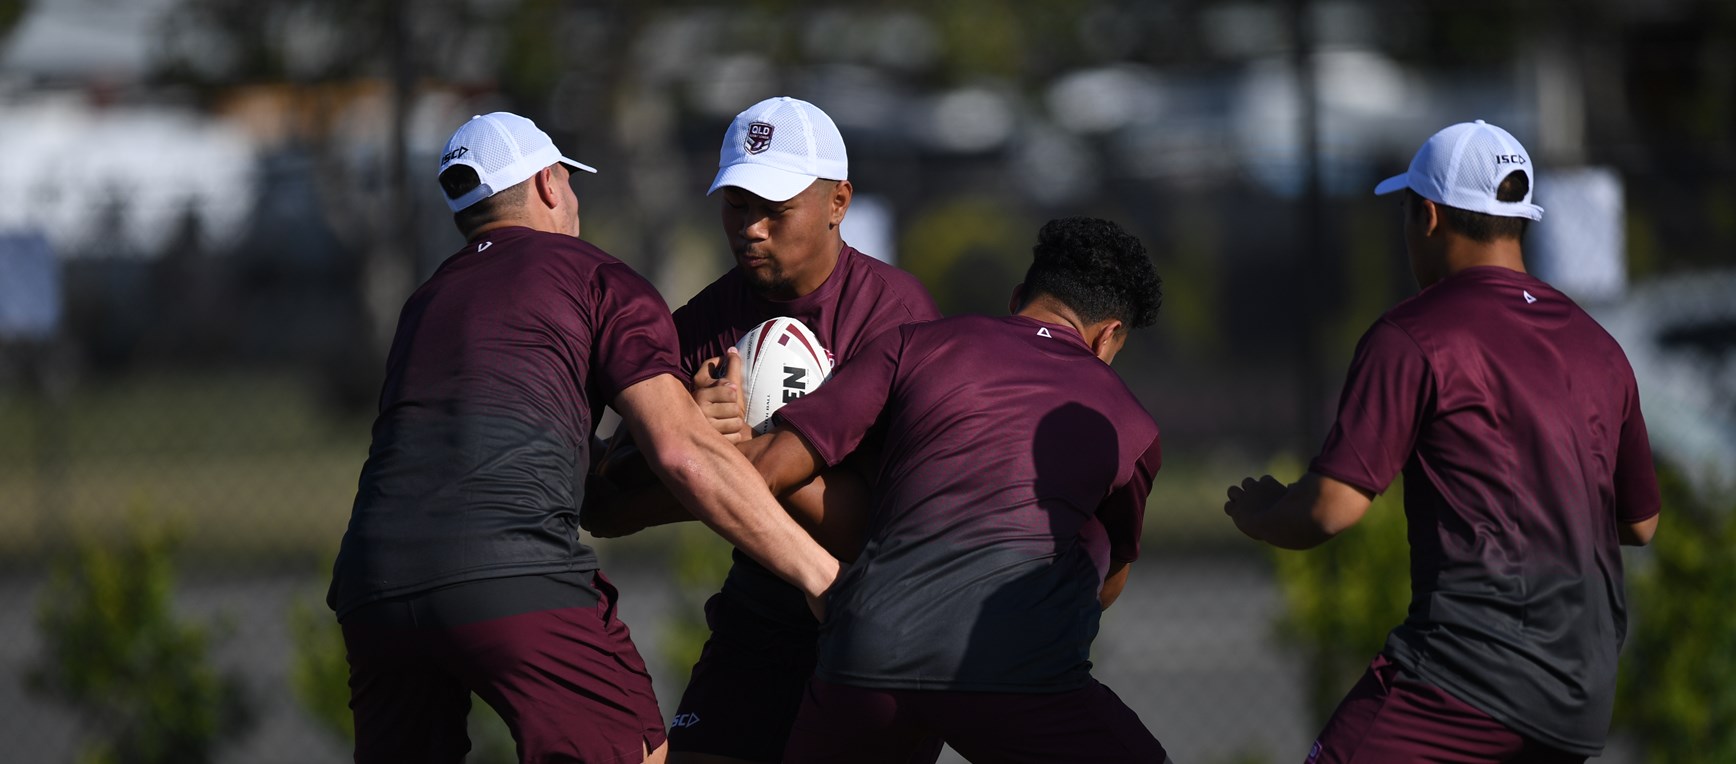 In pictures: Queensland Under 16 teams prep for clash